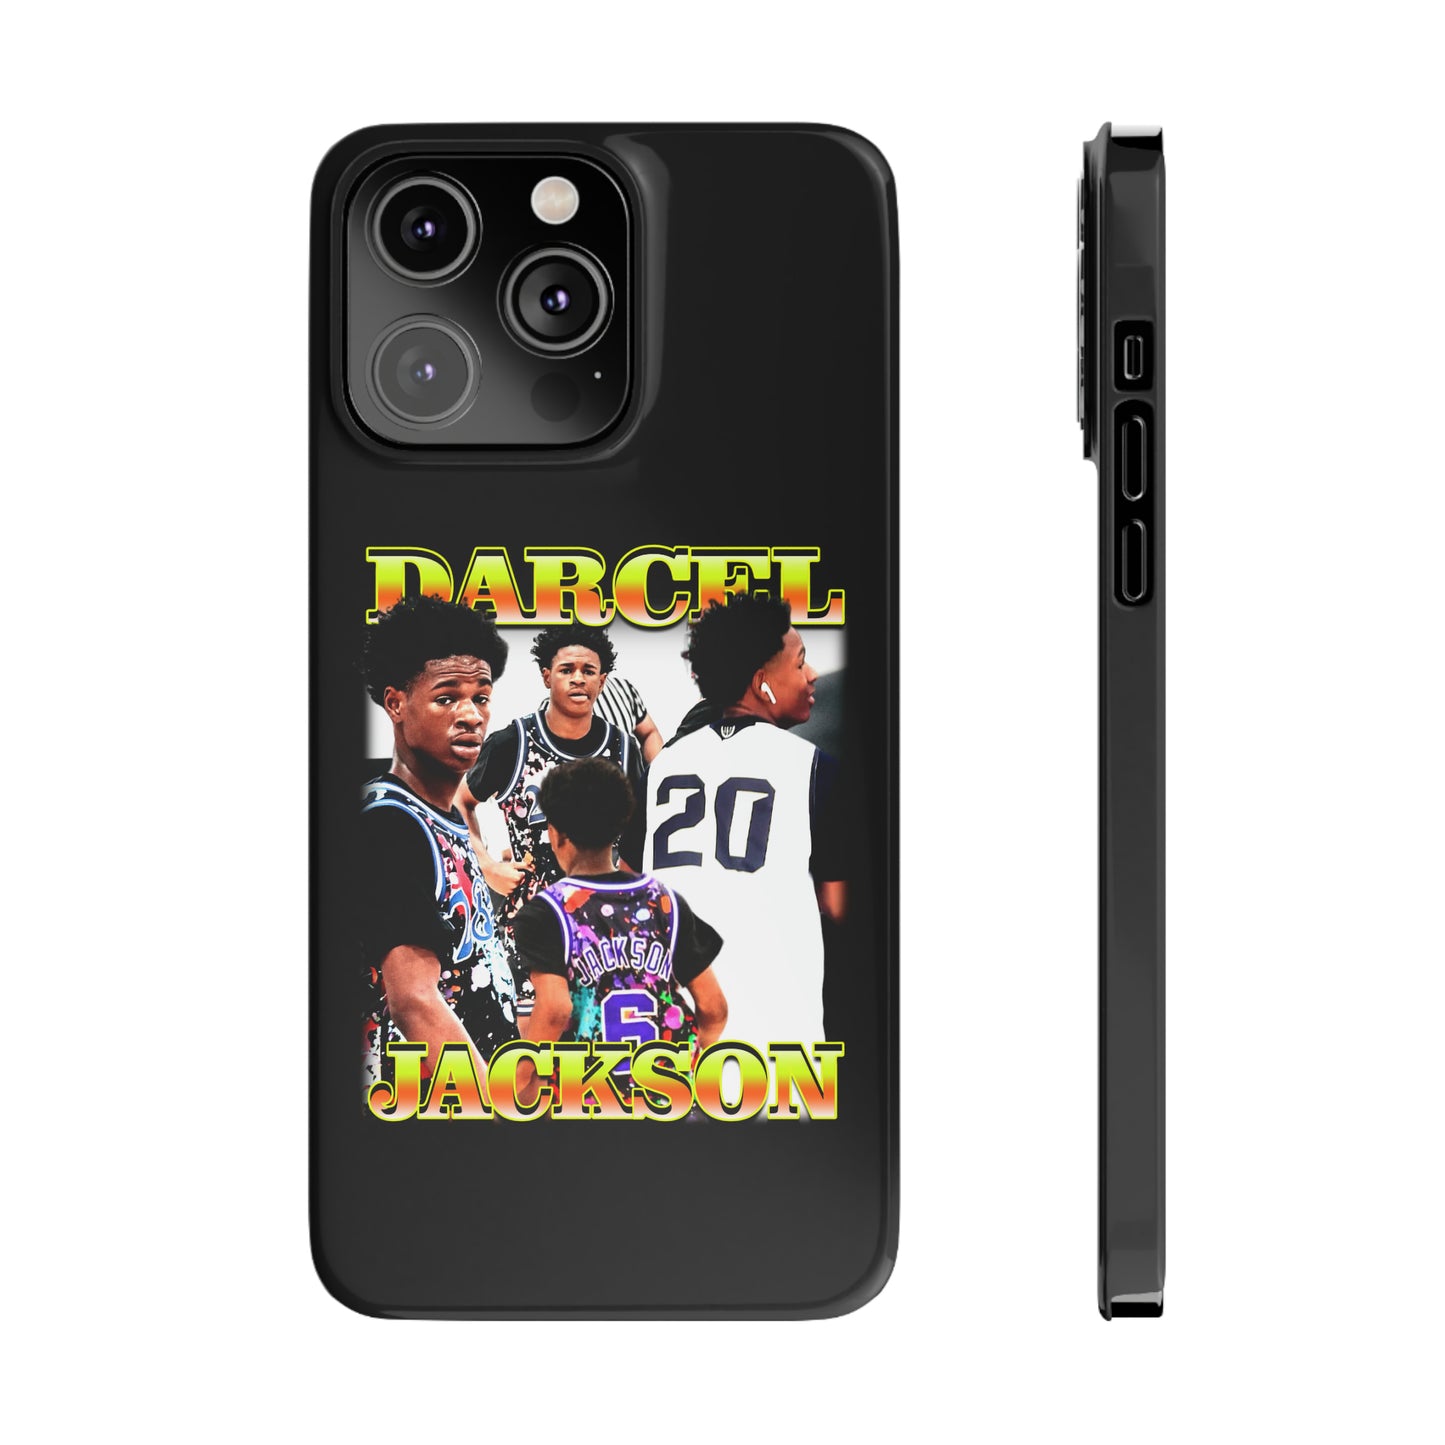 Darcel Jackson Phone Case